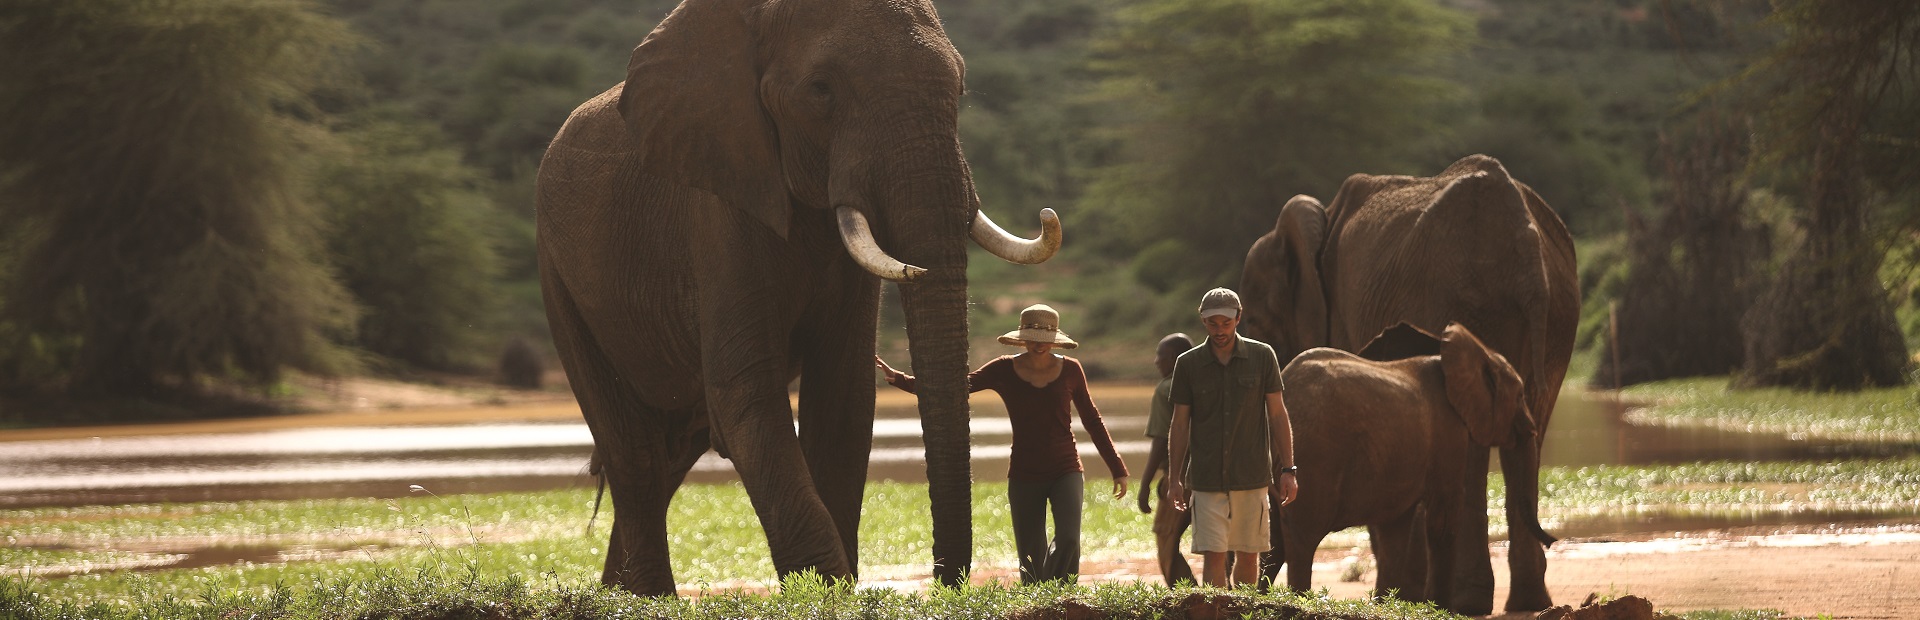 Ol Jogi Wildlife Rescue Center – Elephants